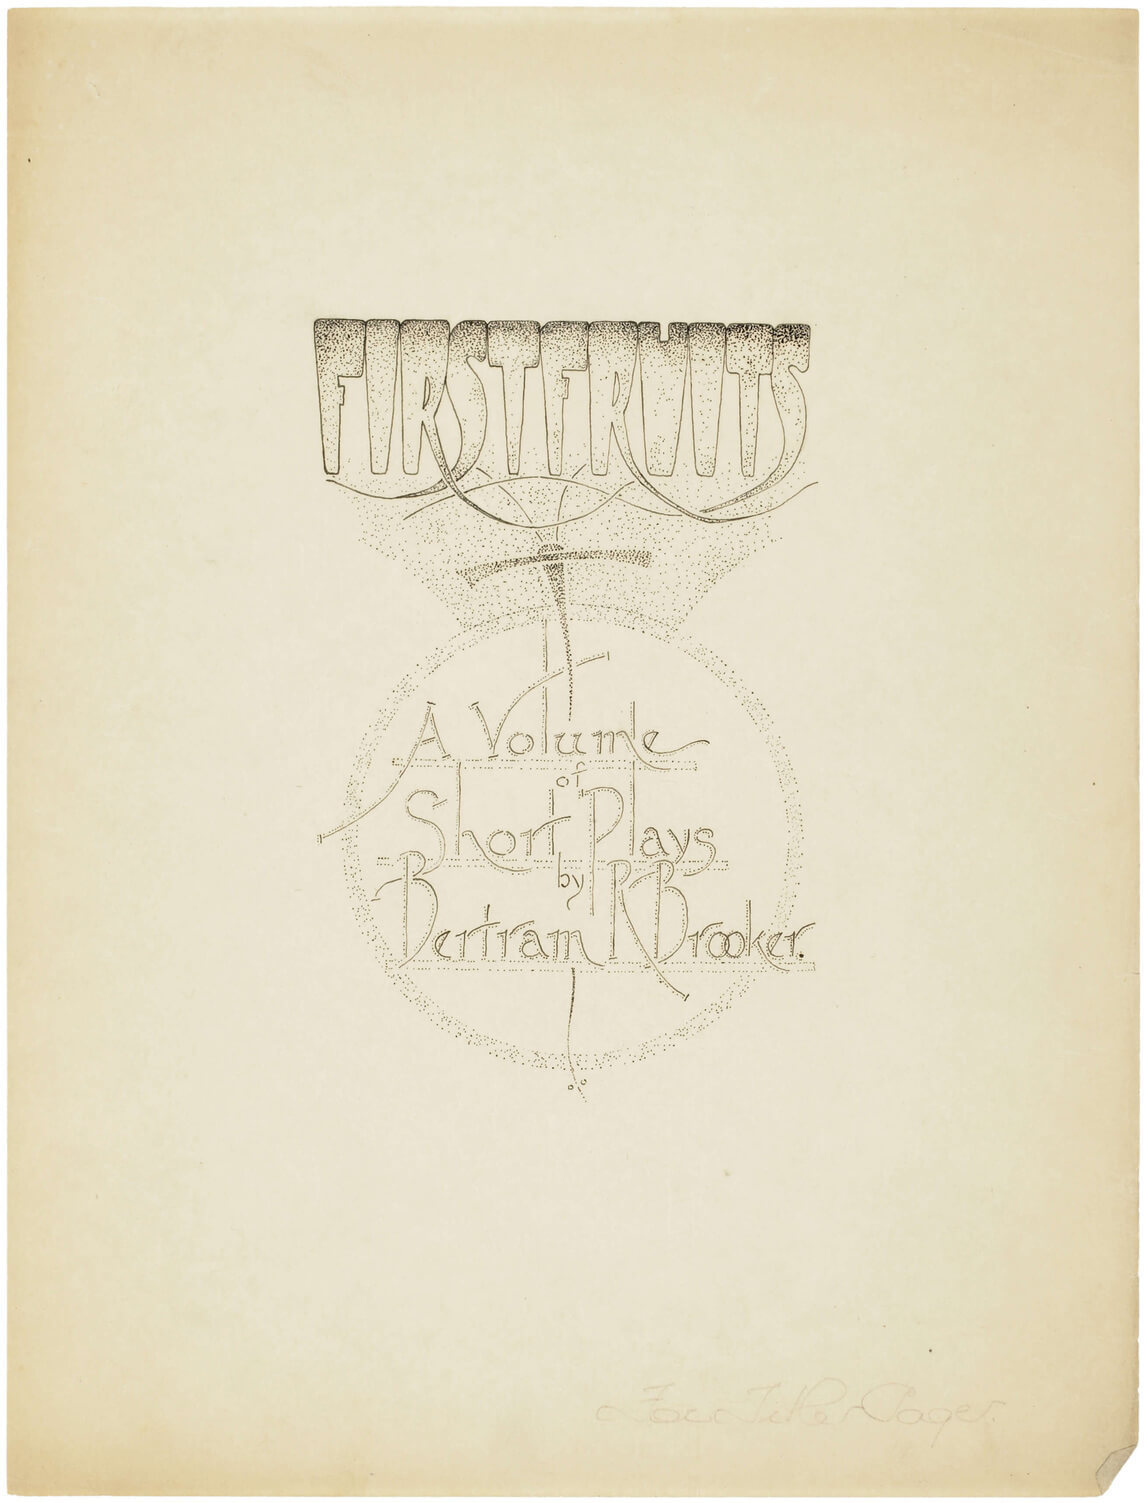 Cover illustration for “First Fruits: A Volume of Short Plays by Bertram R. Brooker, Bertram Brooker